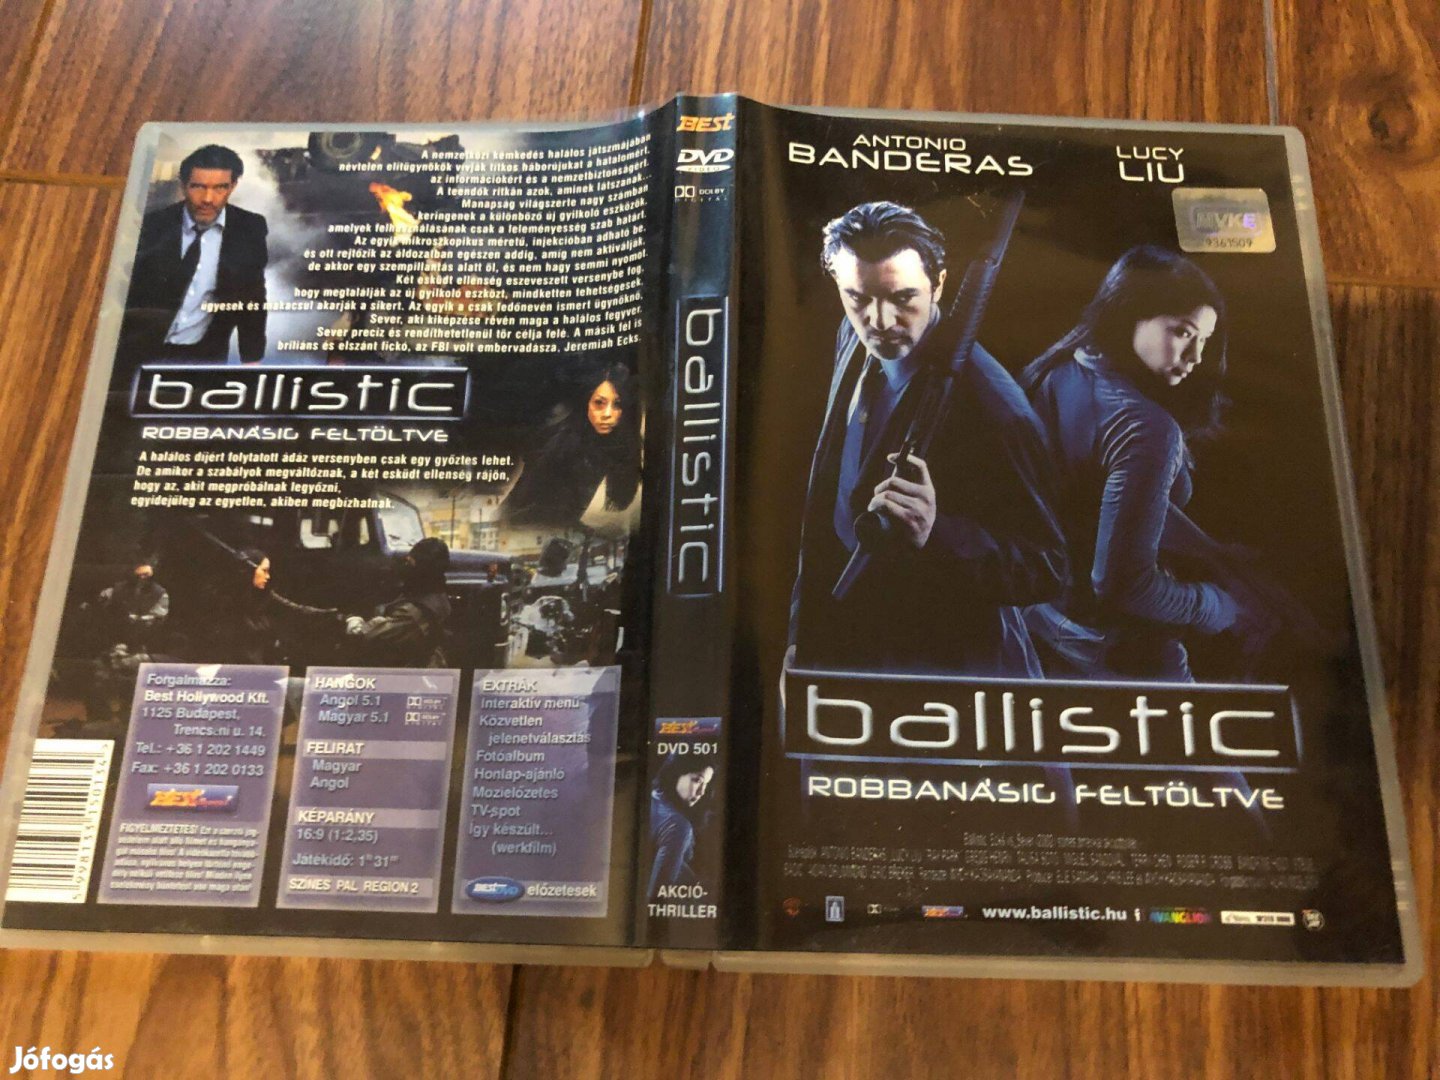 Ballistic Robbanásig feltöltve DVD (Antonio Banderas, Lucy Liu)